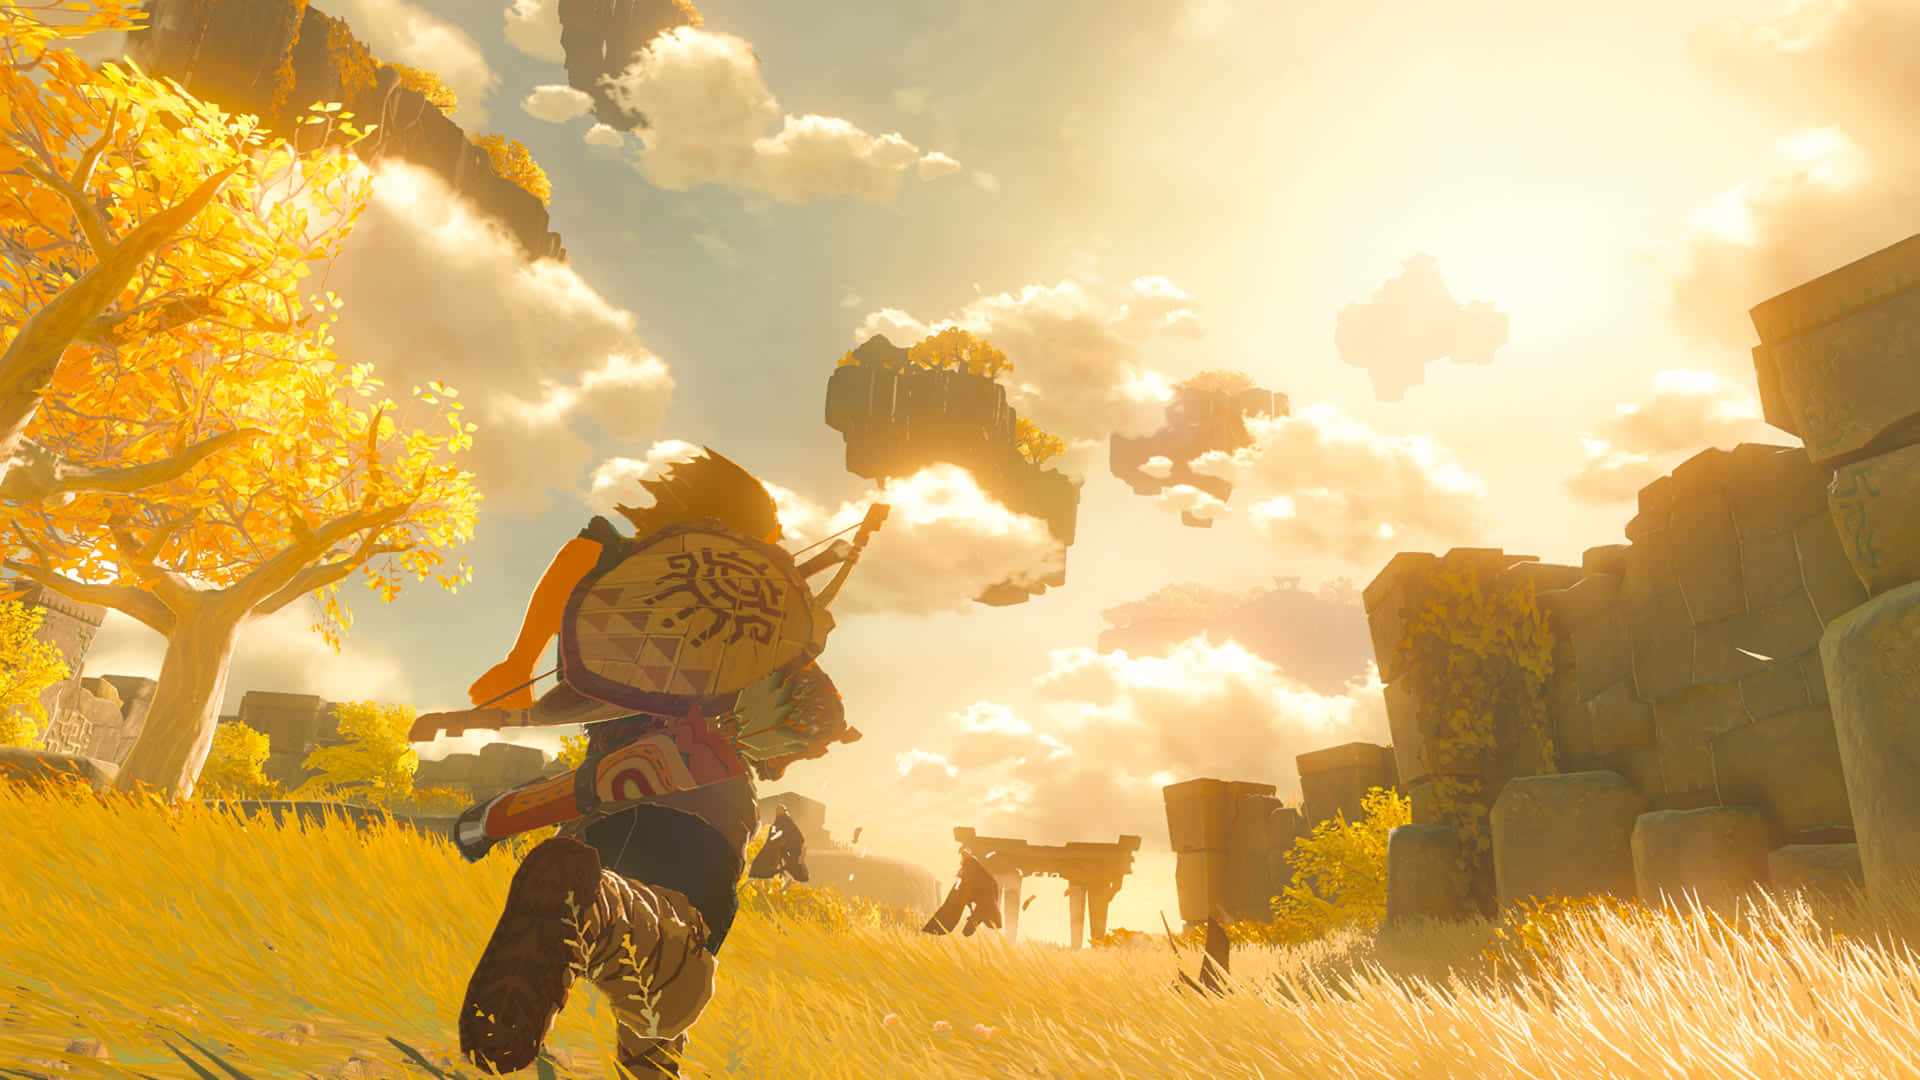 Link navigates the mystical world of The Legend Of Zelda Tears Of The Kingdom Wallpaper